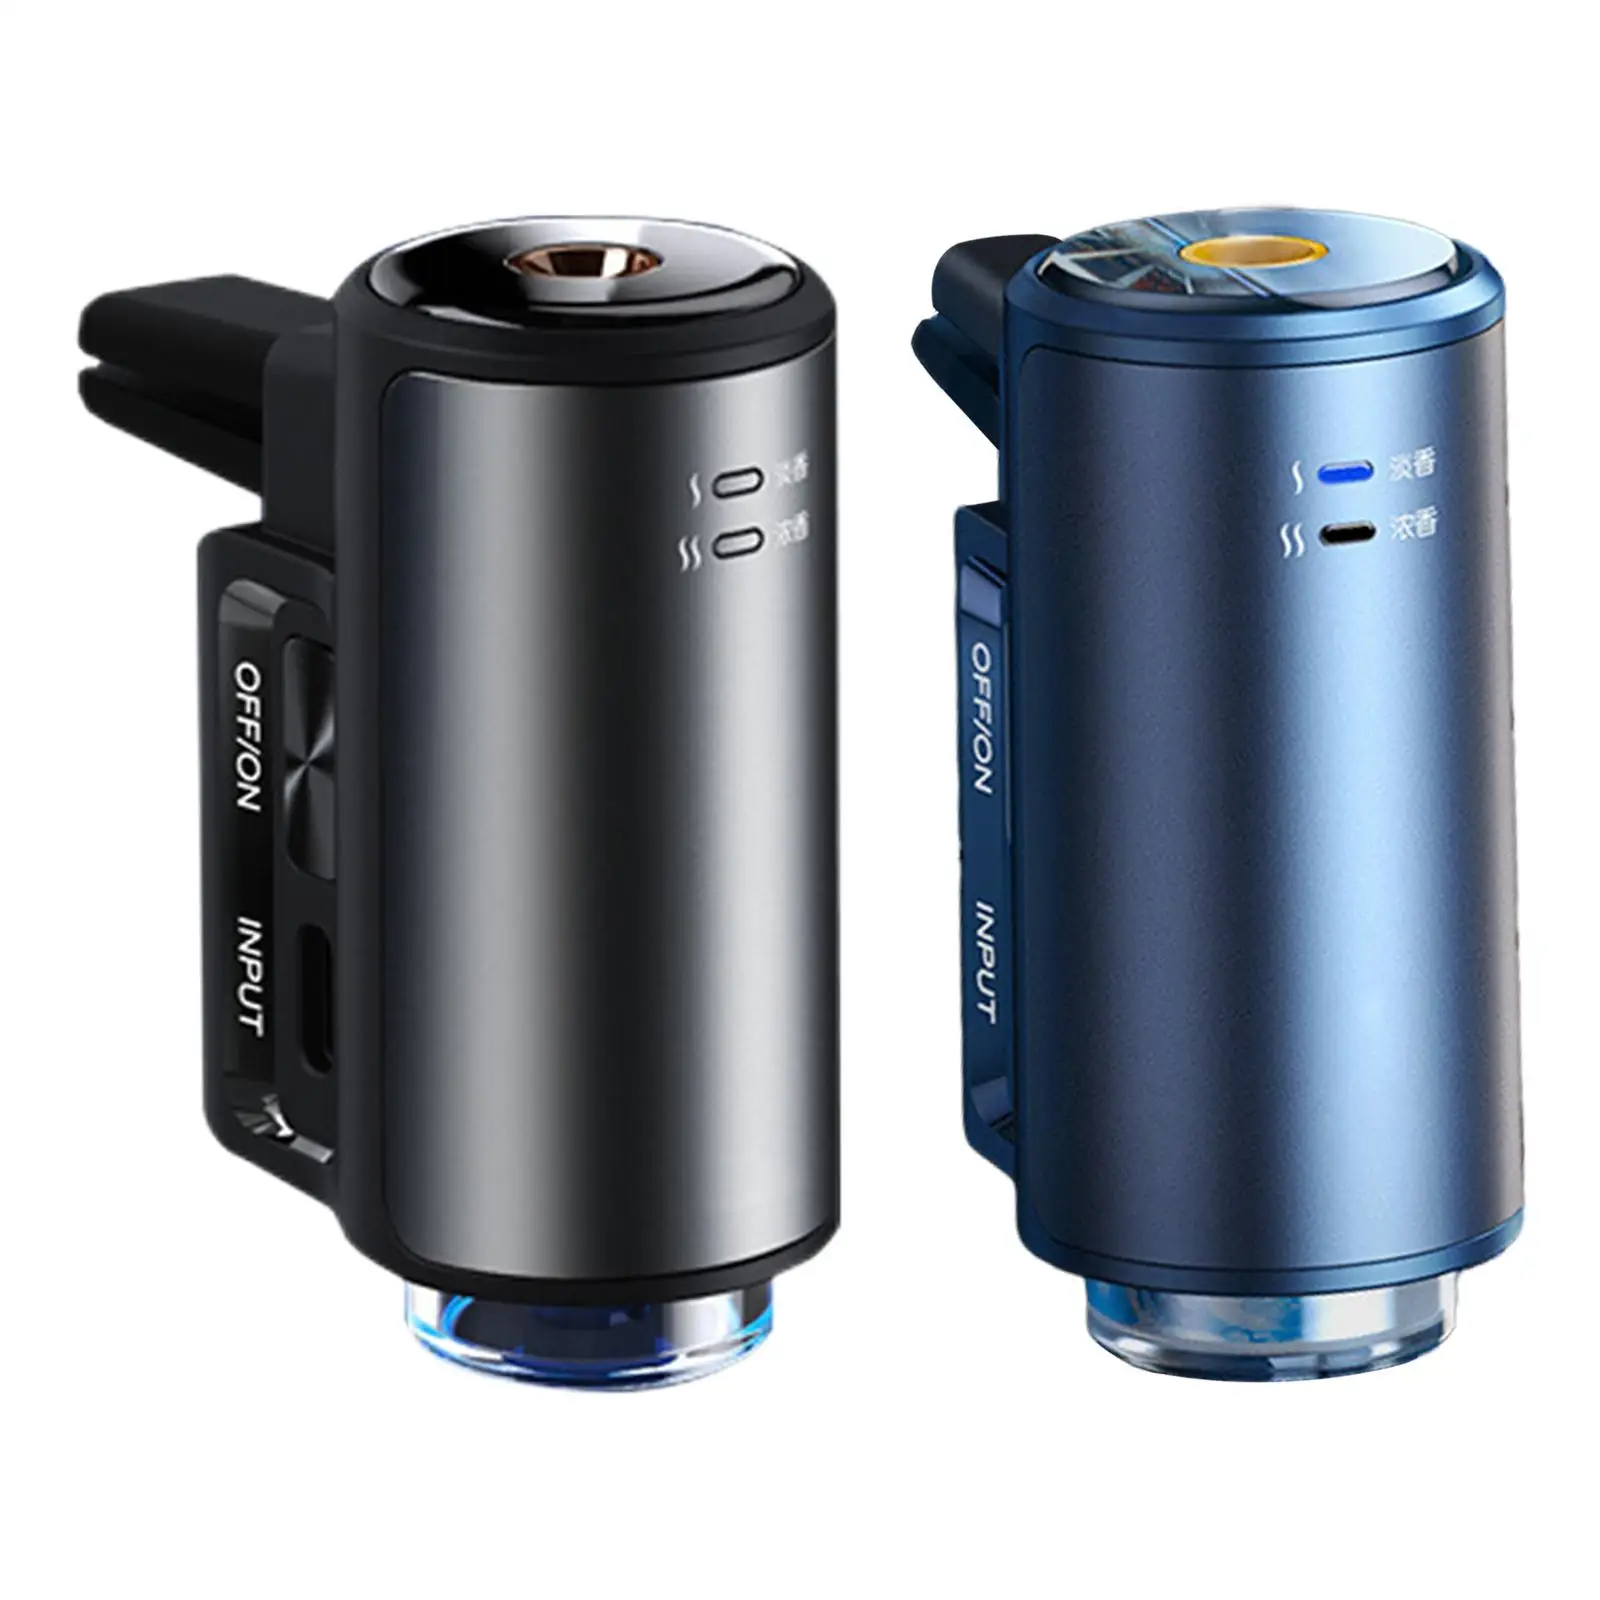      Humidifiers Perfume USB Car  Freshener for Bathroom Car Air Outlet